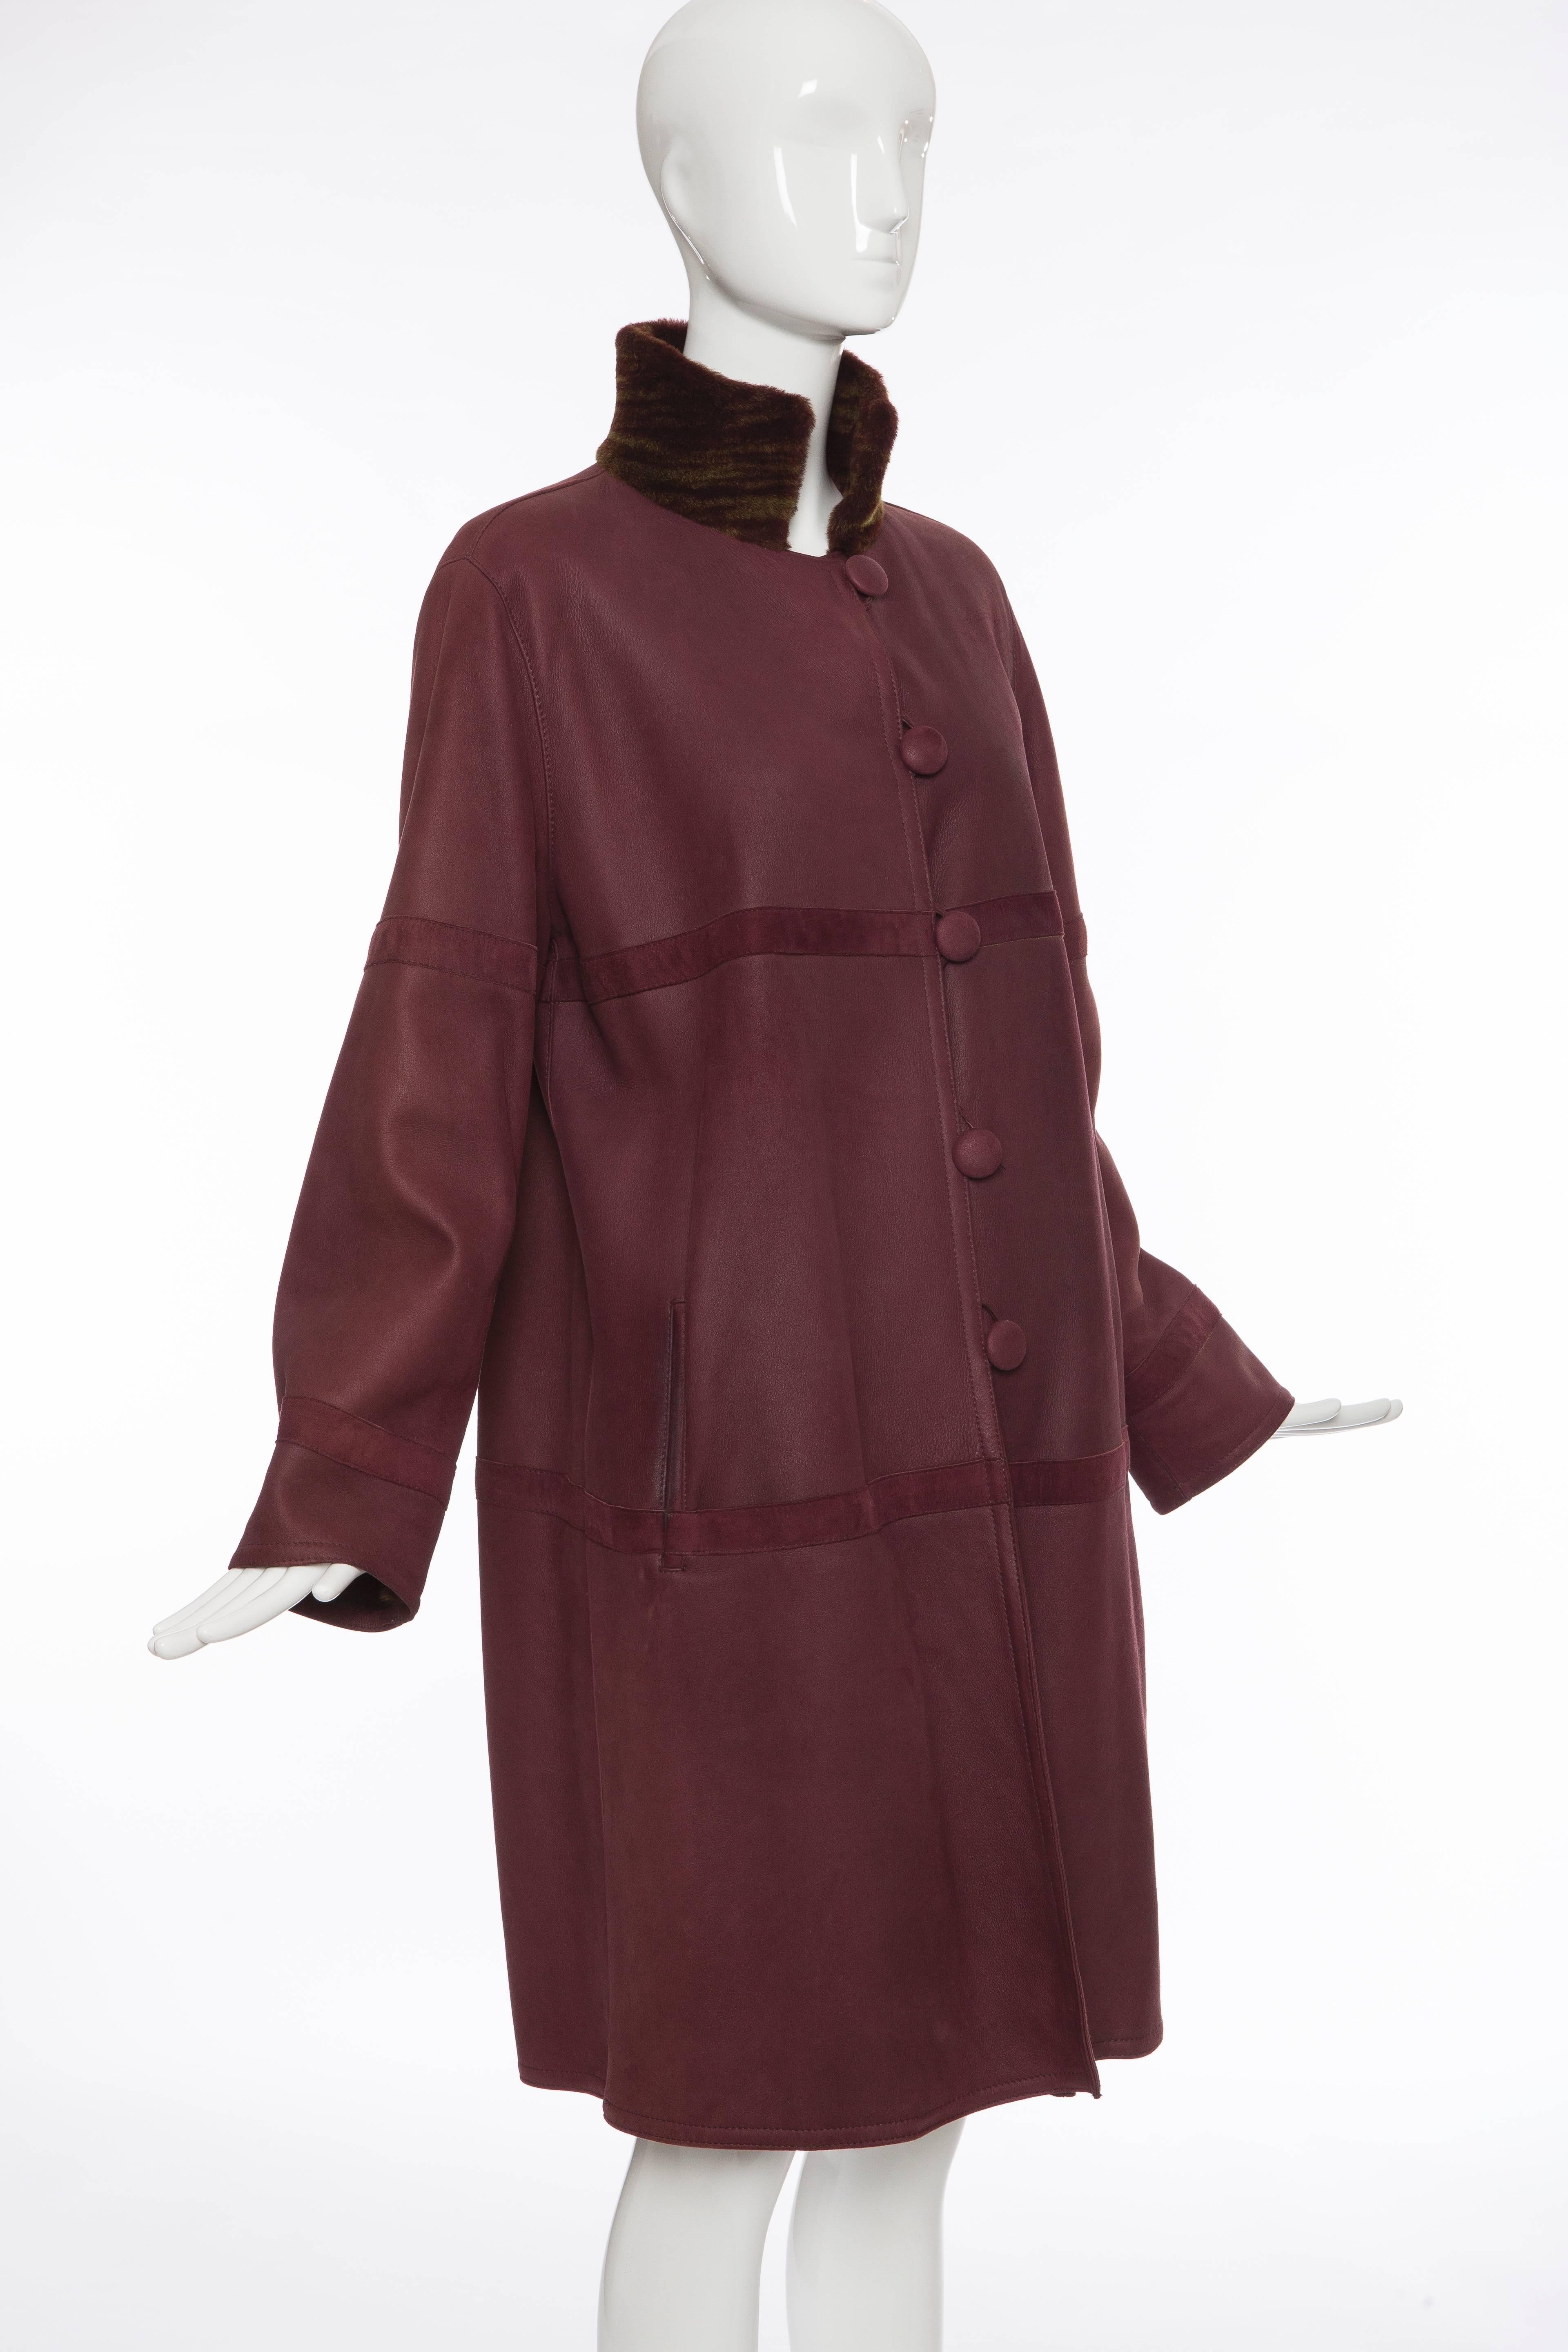 Oscar De la Renta Couture Plum Shearling Coat In Excellent Condition For Sale In Cincinnati, OH